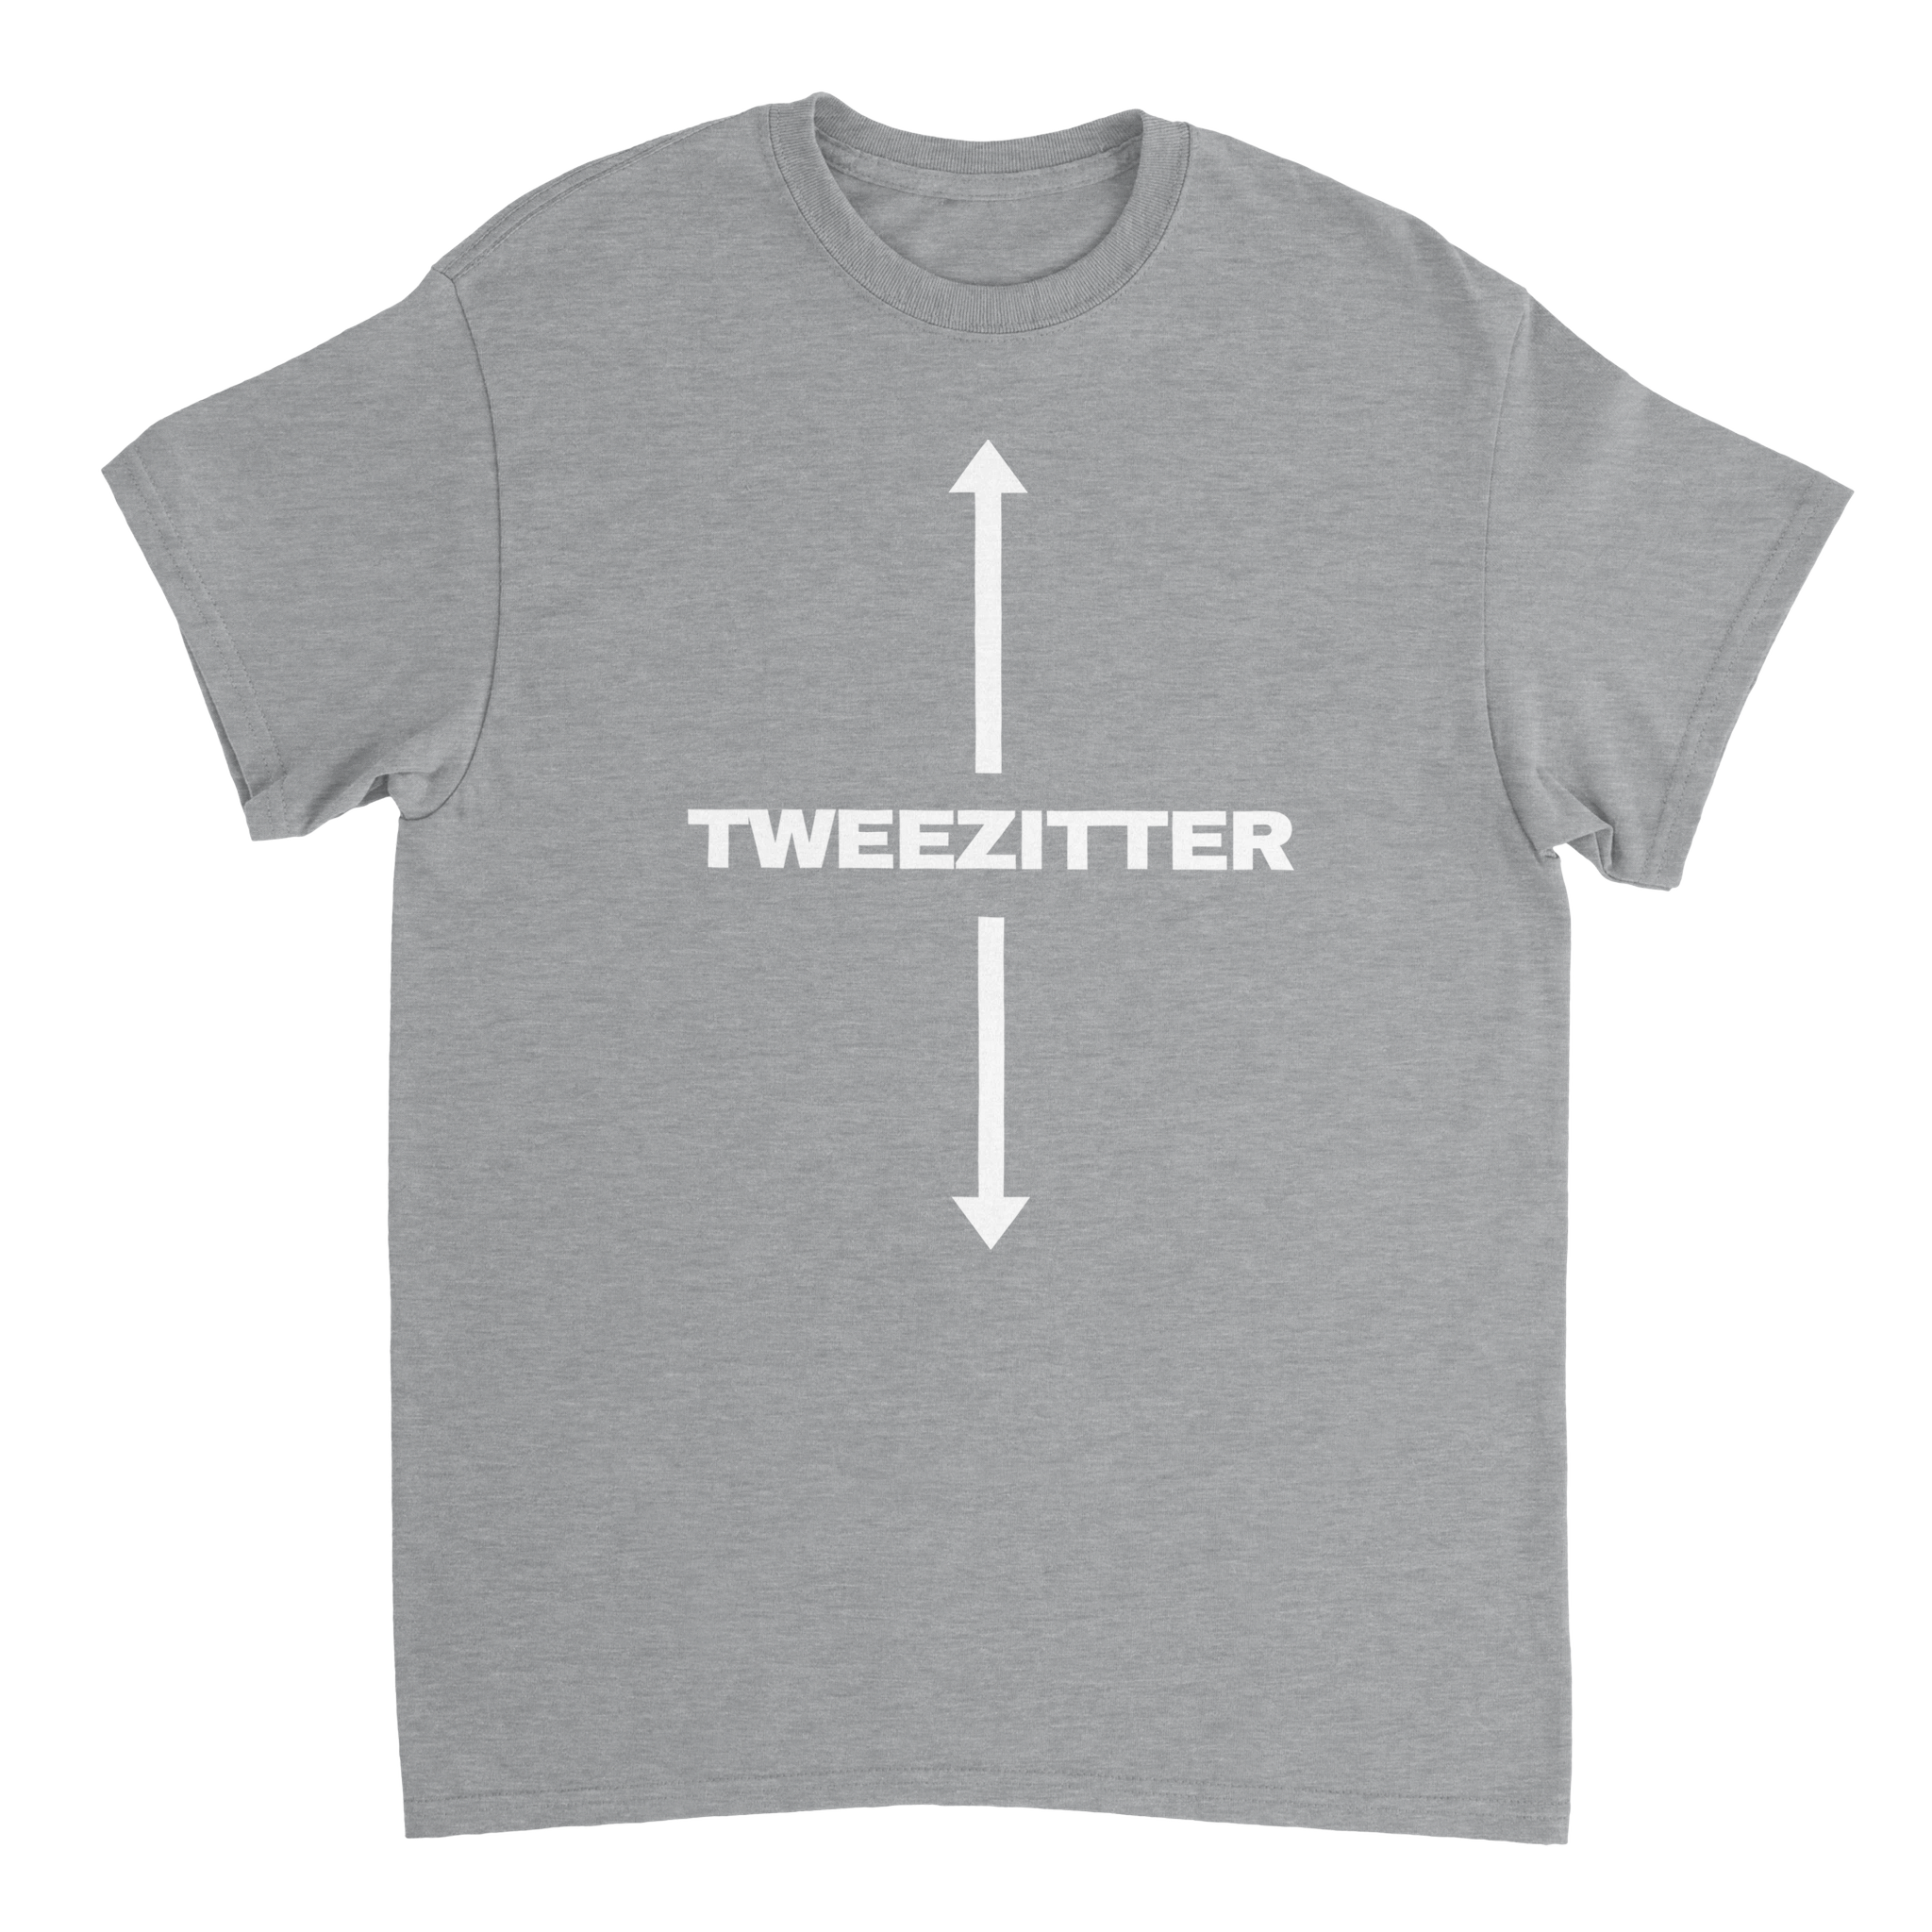 Tweezitter T-shirt